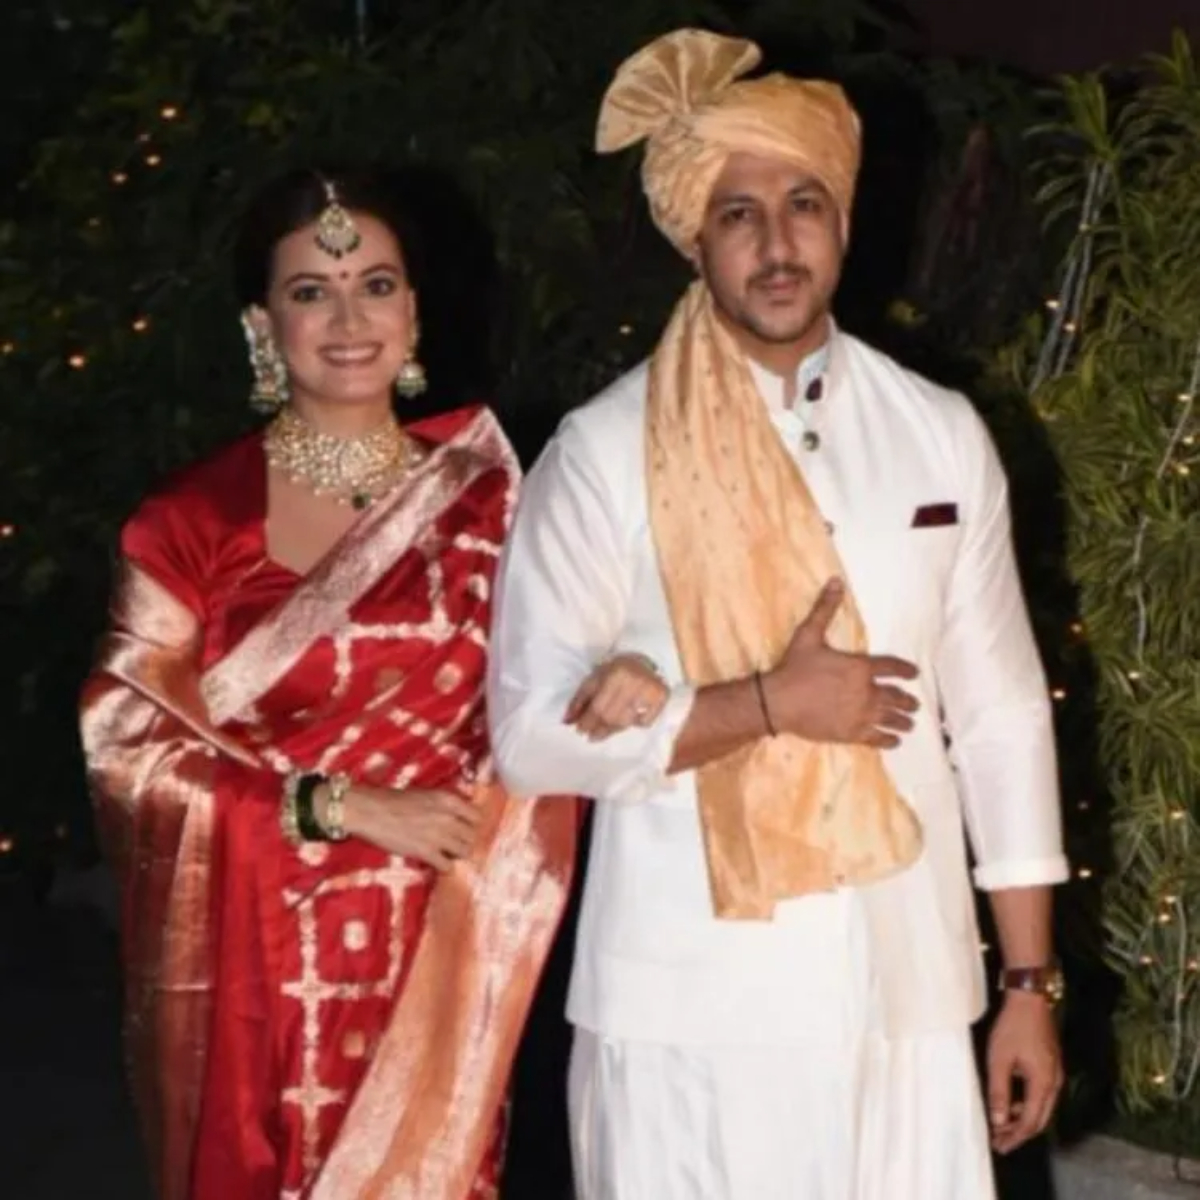 EXCLUSIVE: Dia Mirza and Vaibhav Rekhi Wedding: Former wife Sunaina Rekhi says no love lost